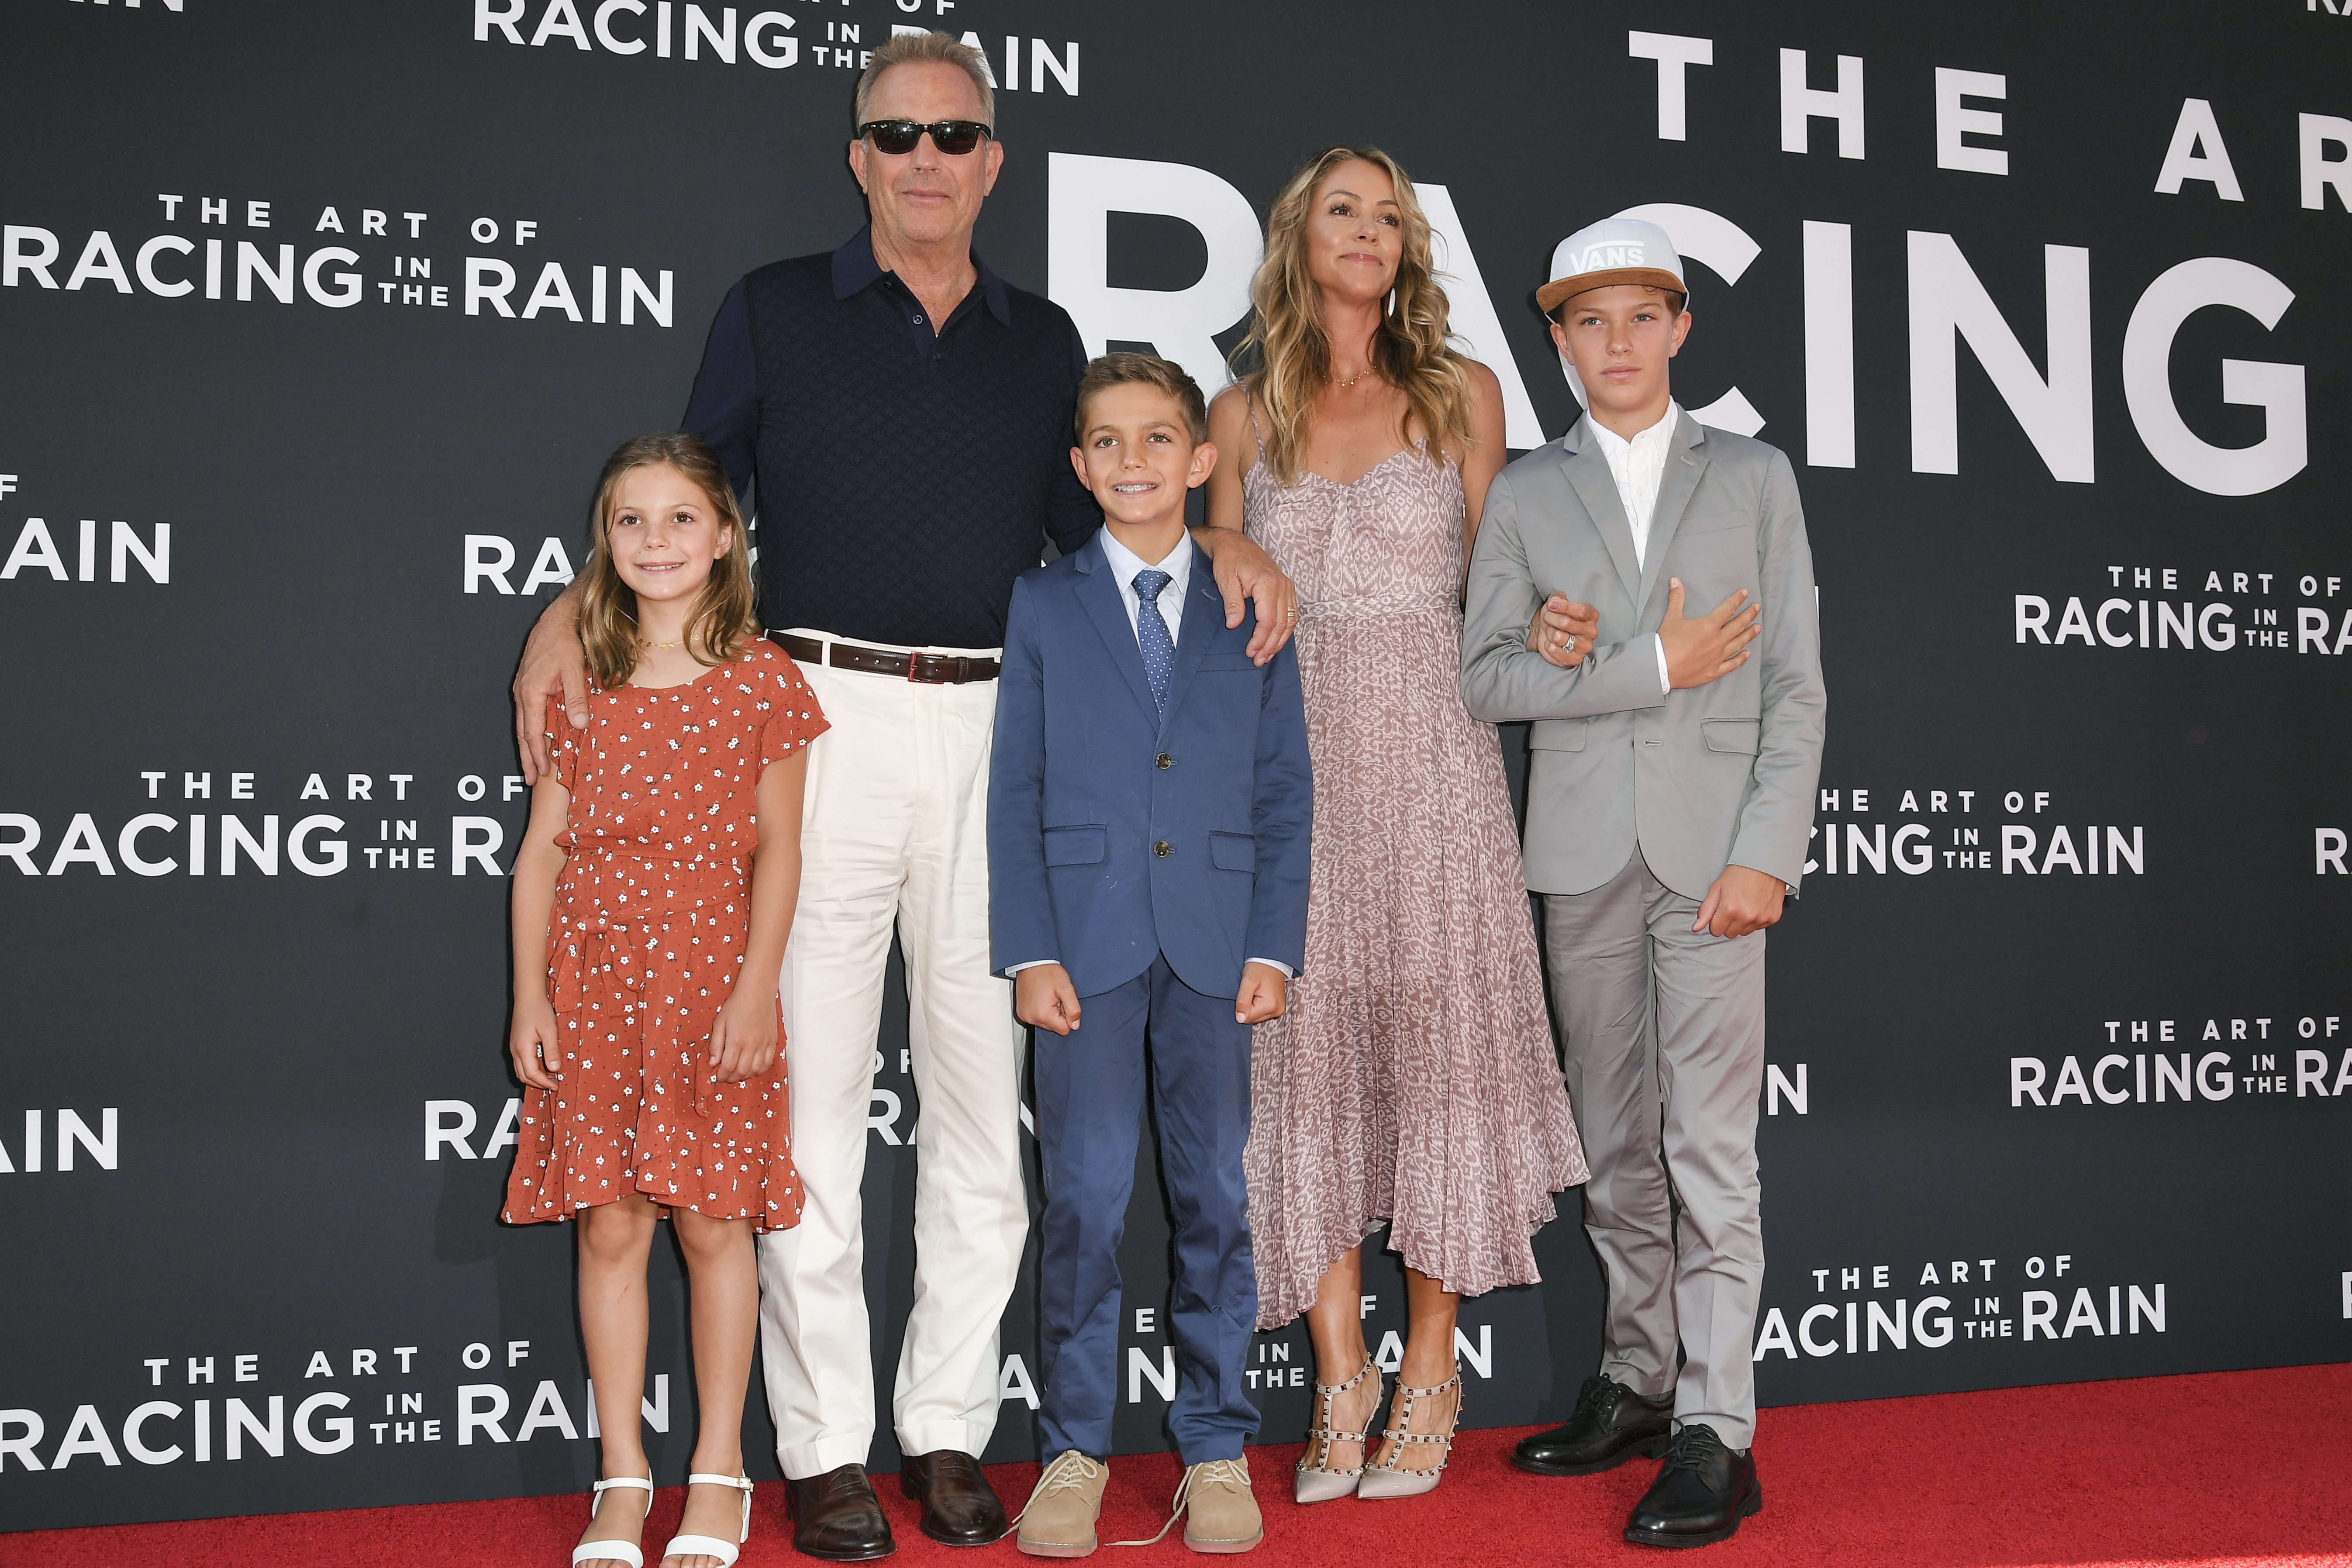 Kevin Costner et Christine Baumgartner à la première du film 'The Art of Racing in the Rain', Arrivées, El Capitan Theatre, Los Angeles, USA en 2019 | Source : Getty Images